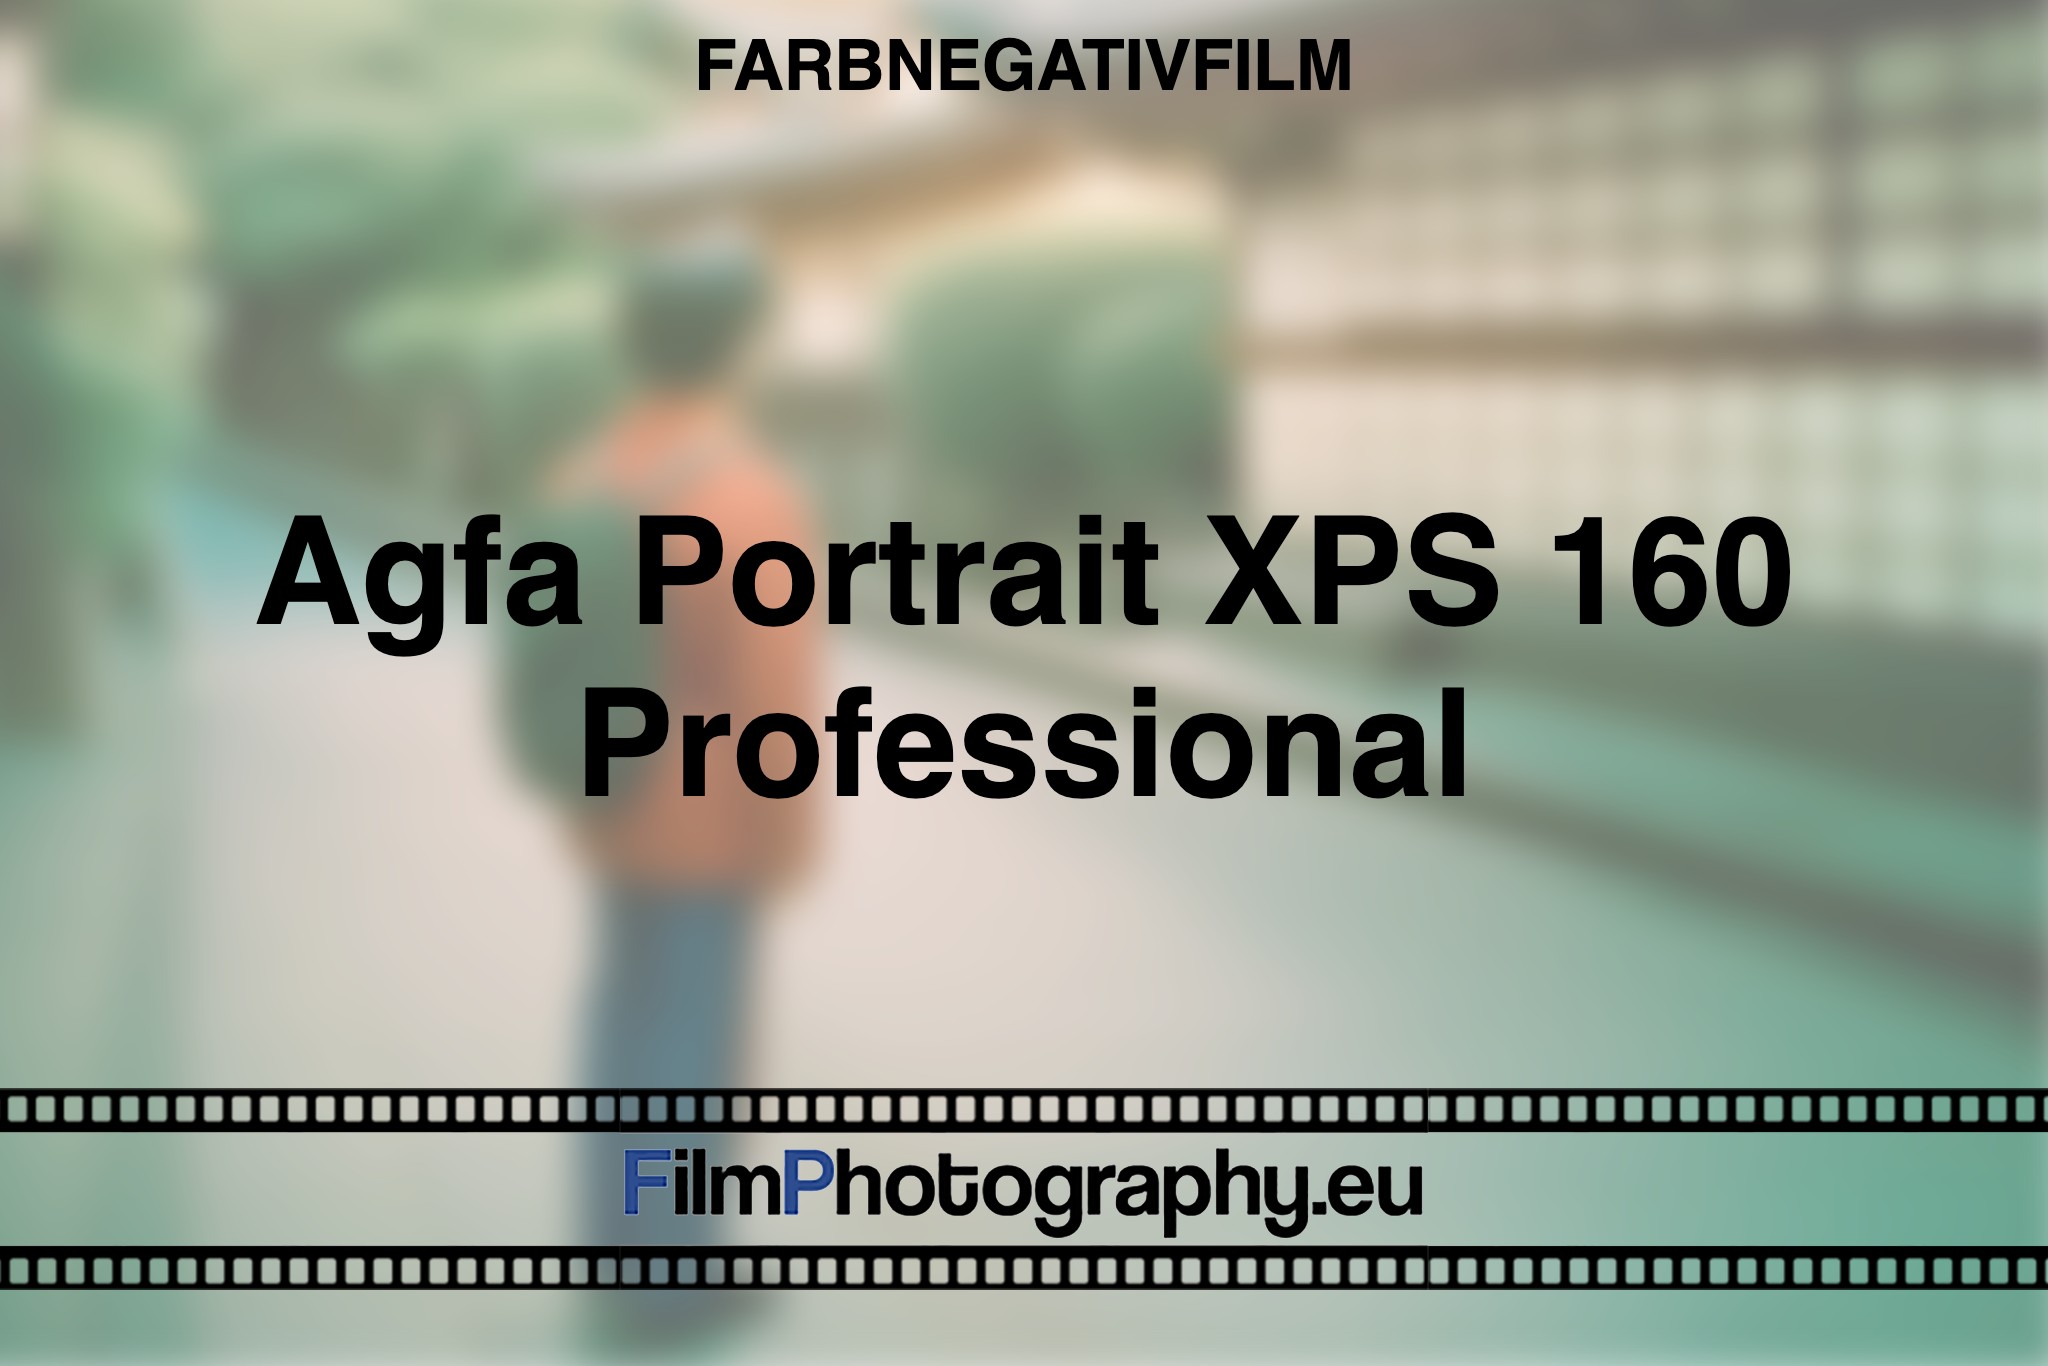 agfa-portrait-xps-160-professional-farbnegativfilm-bnv